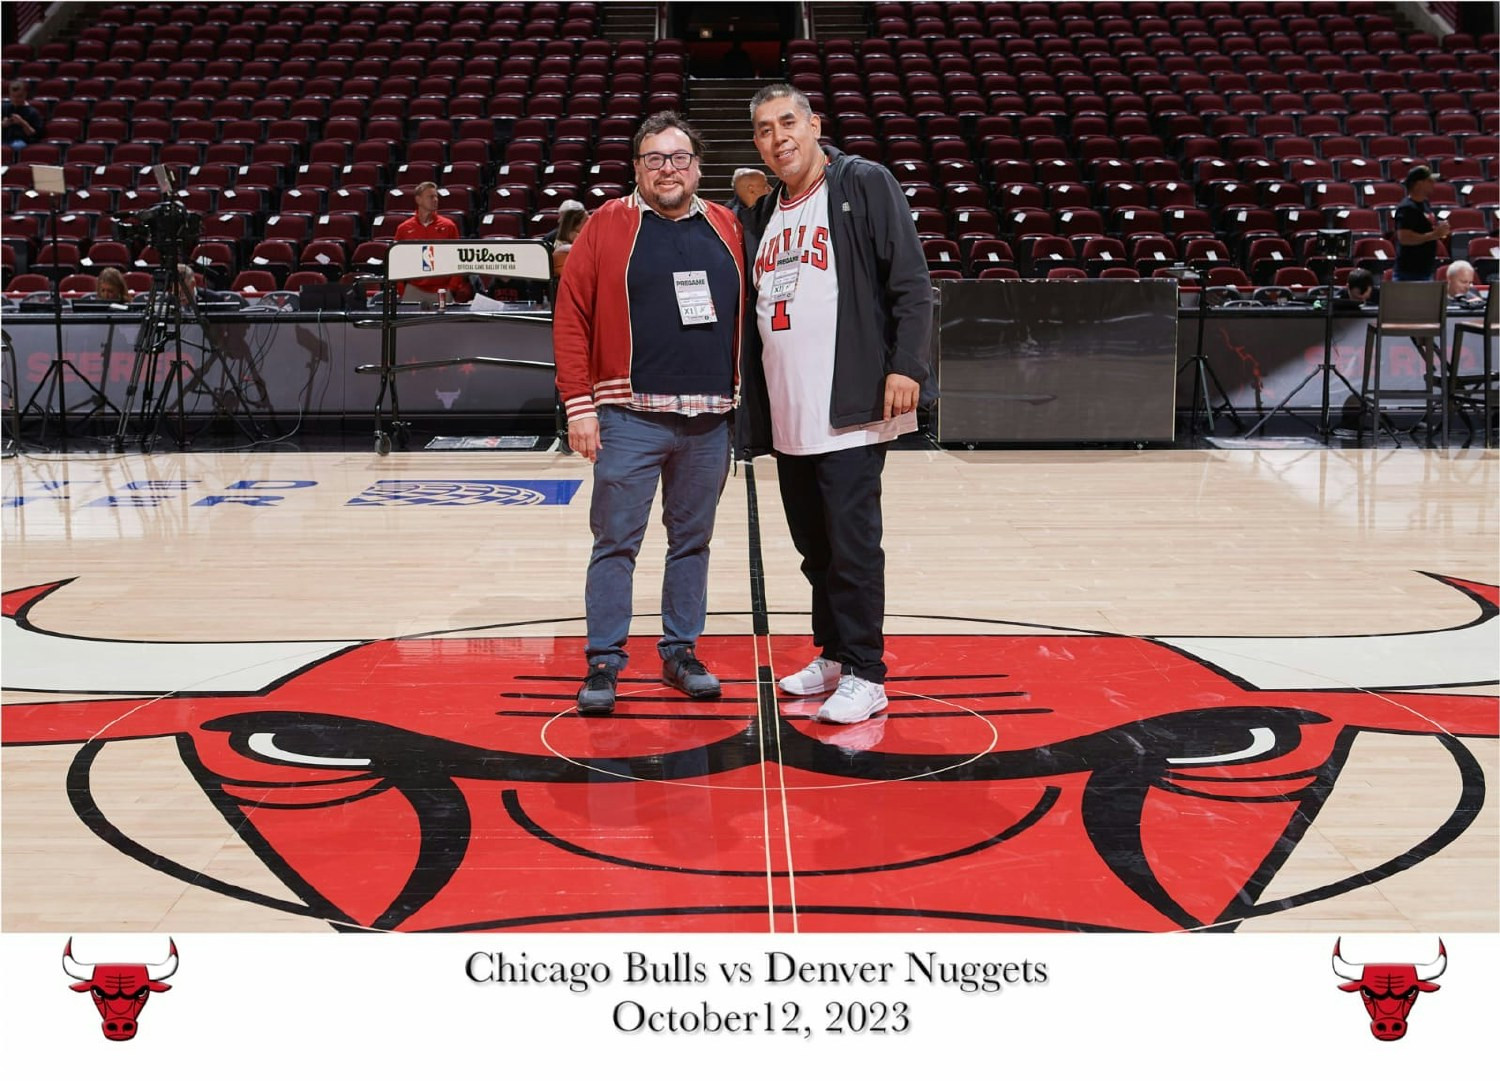 Joe S. and Joe P. enjoying Pioneer's Chicago Bulls season tickets